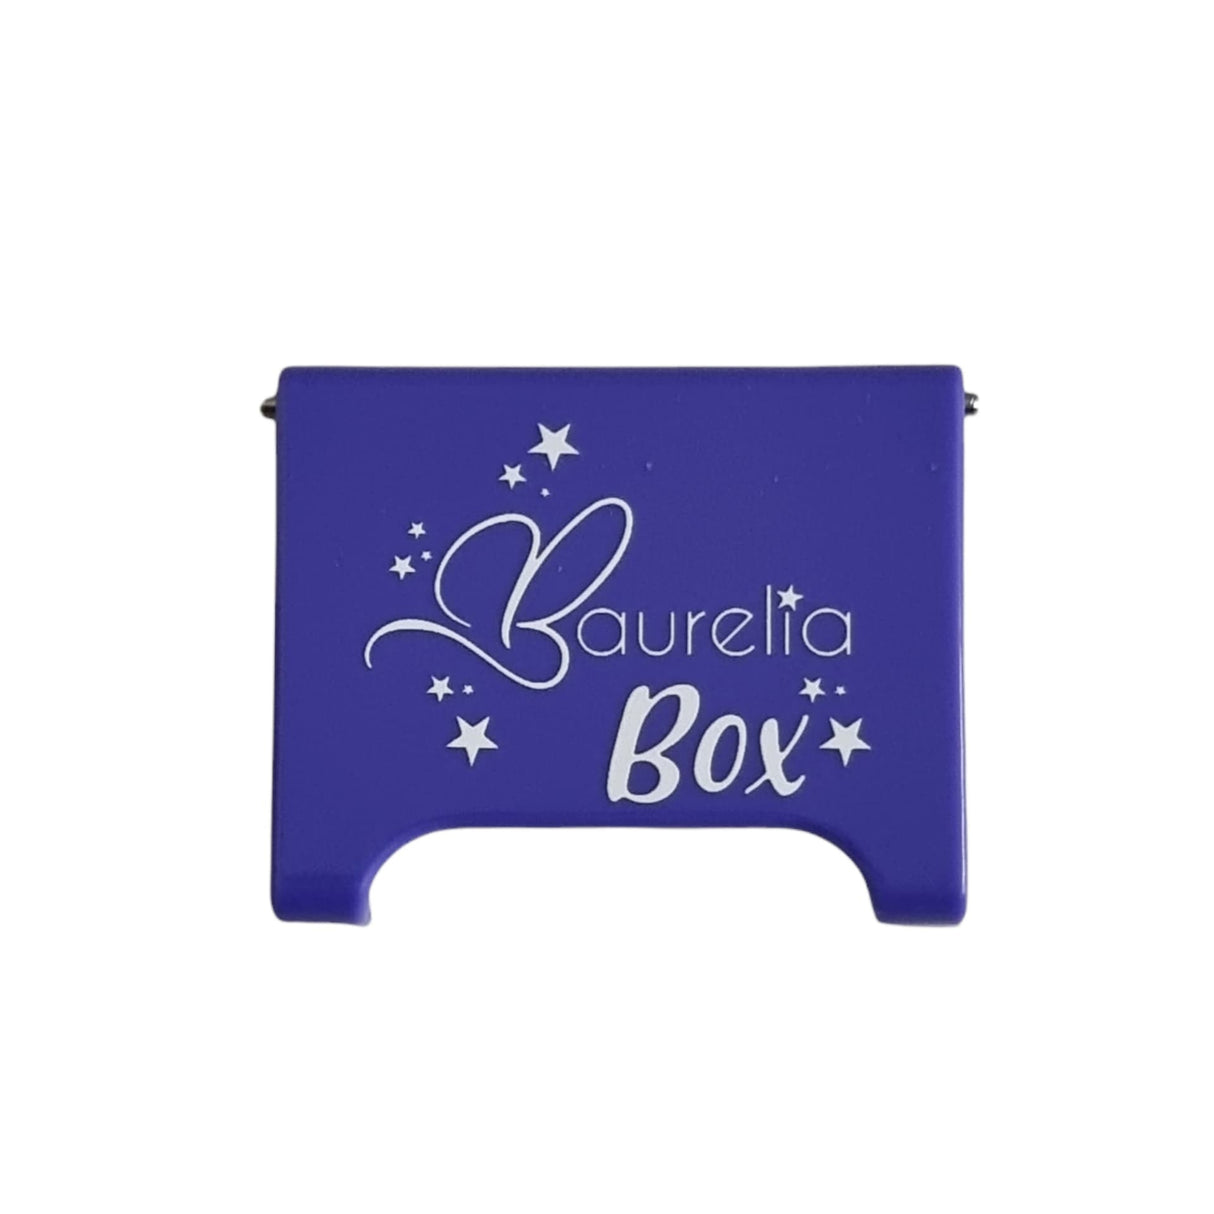 Ersatzverschluss Baurelia Box Midi